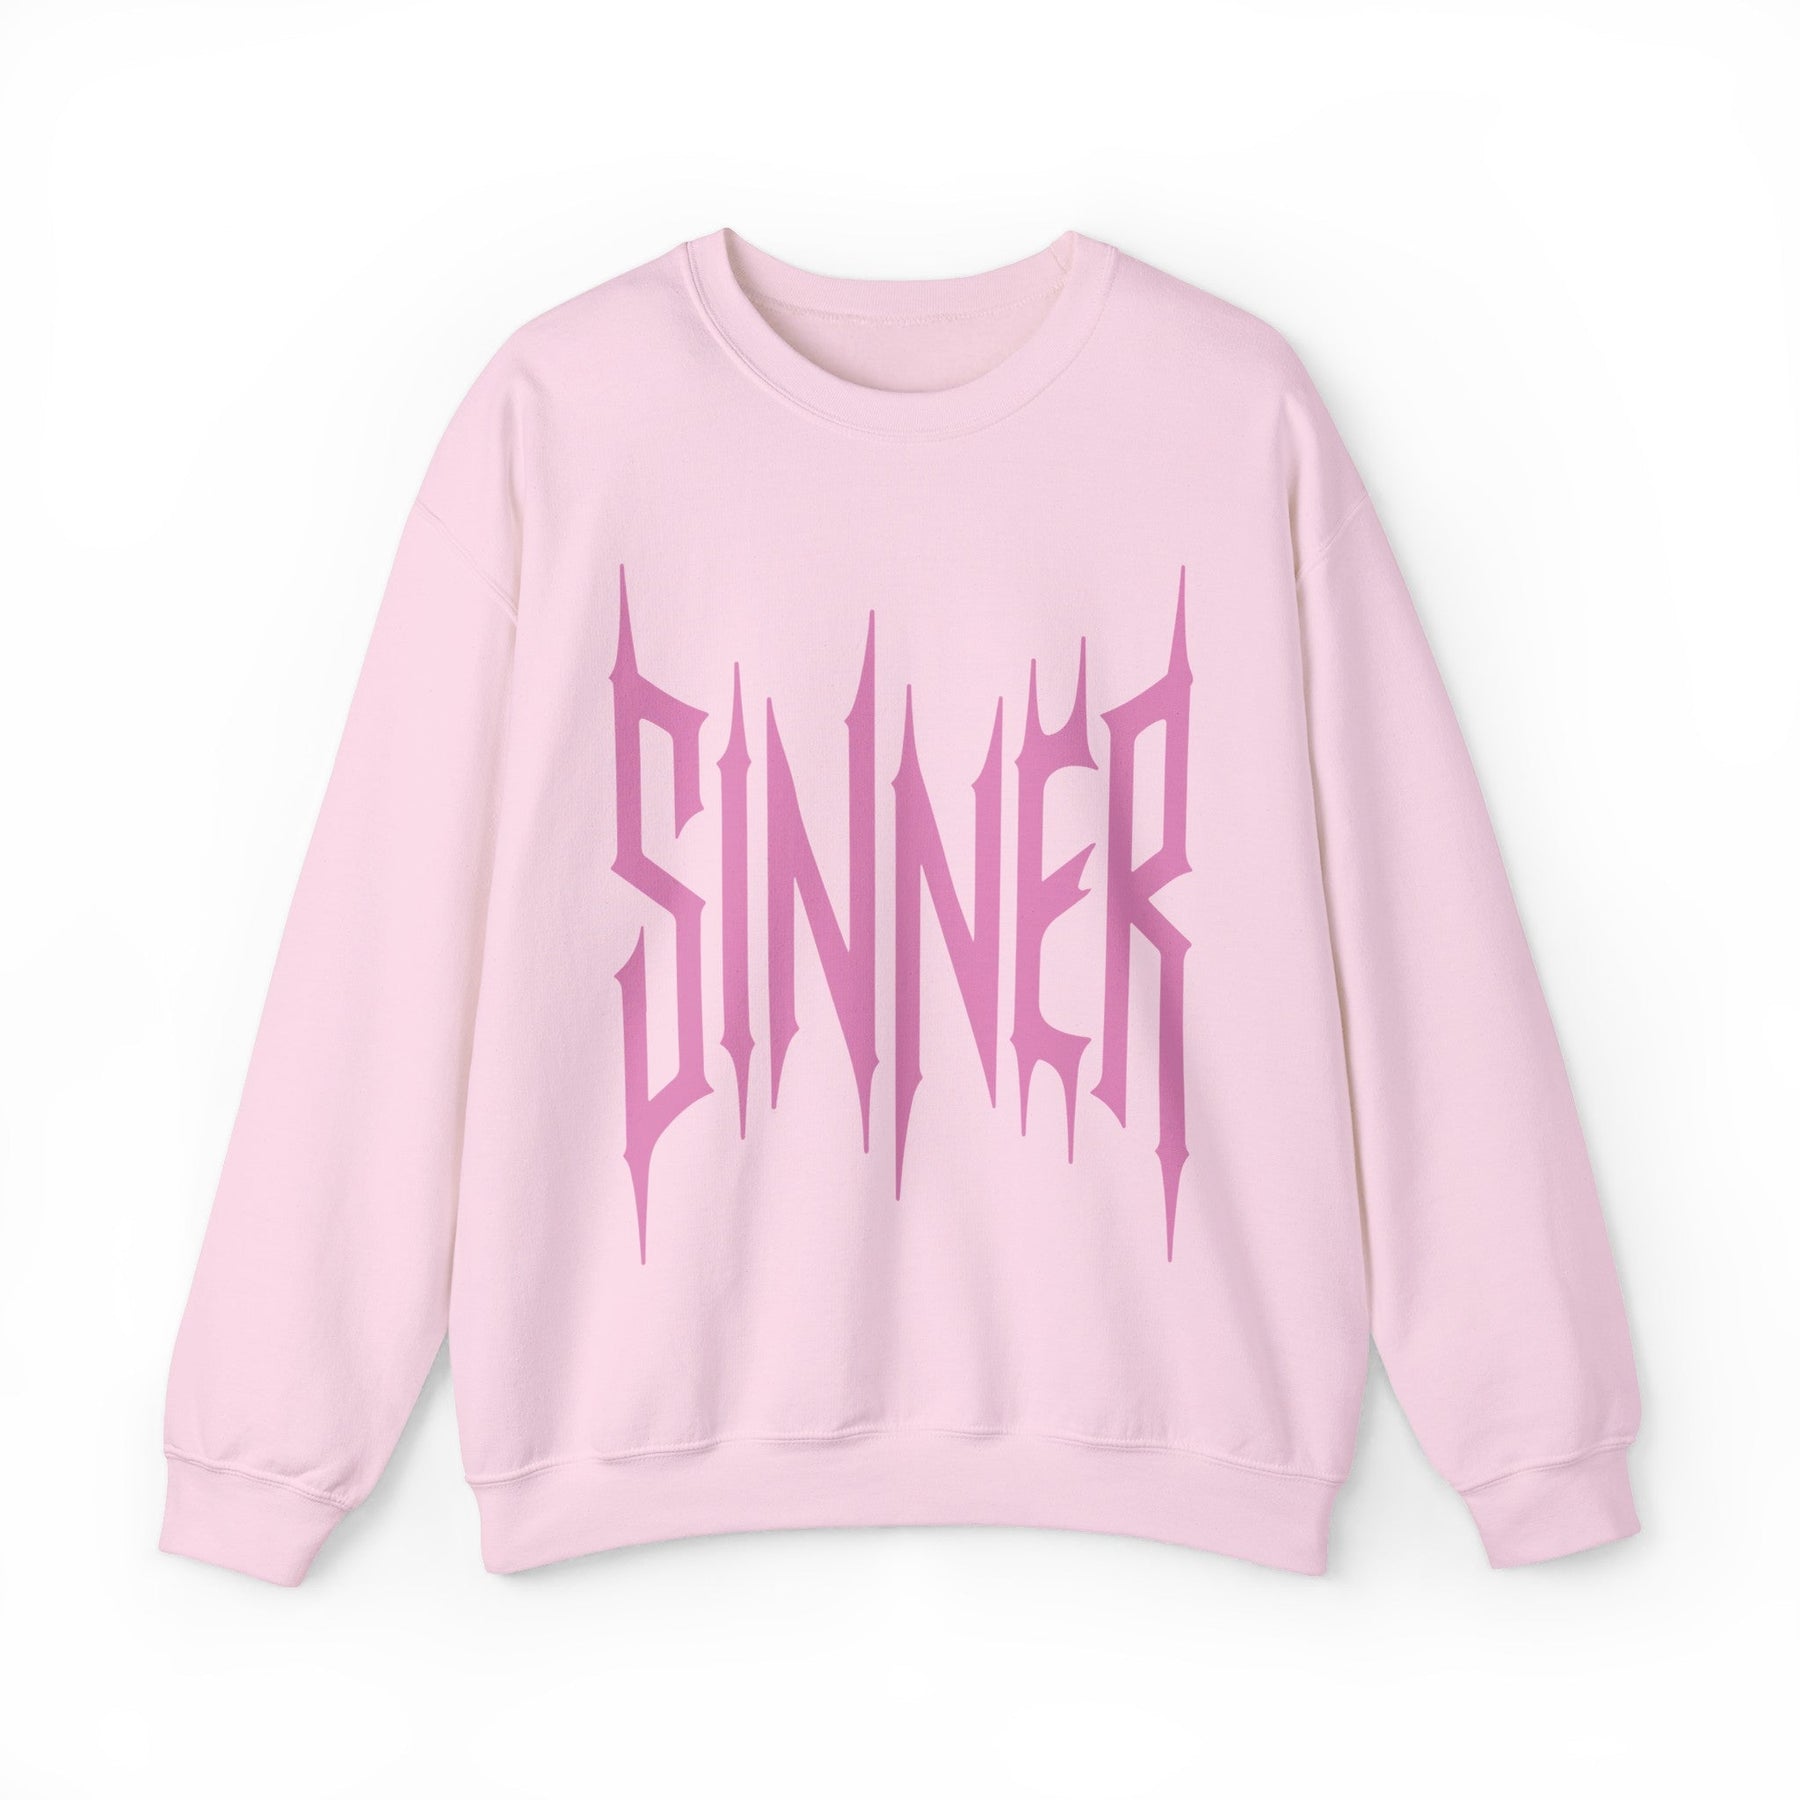 Sinner Unisex Sweatshirt - Goth Cloth Co.Sweatshirt34530284472662528363